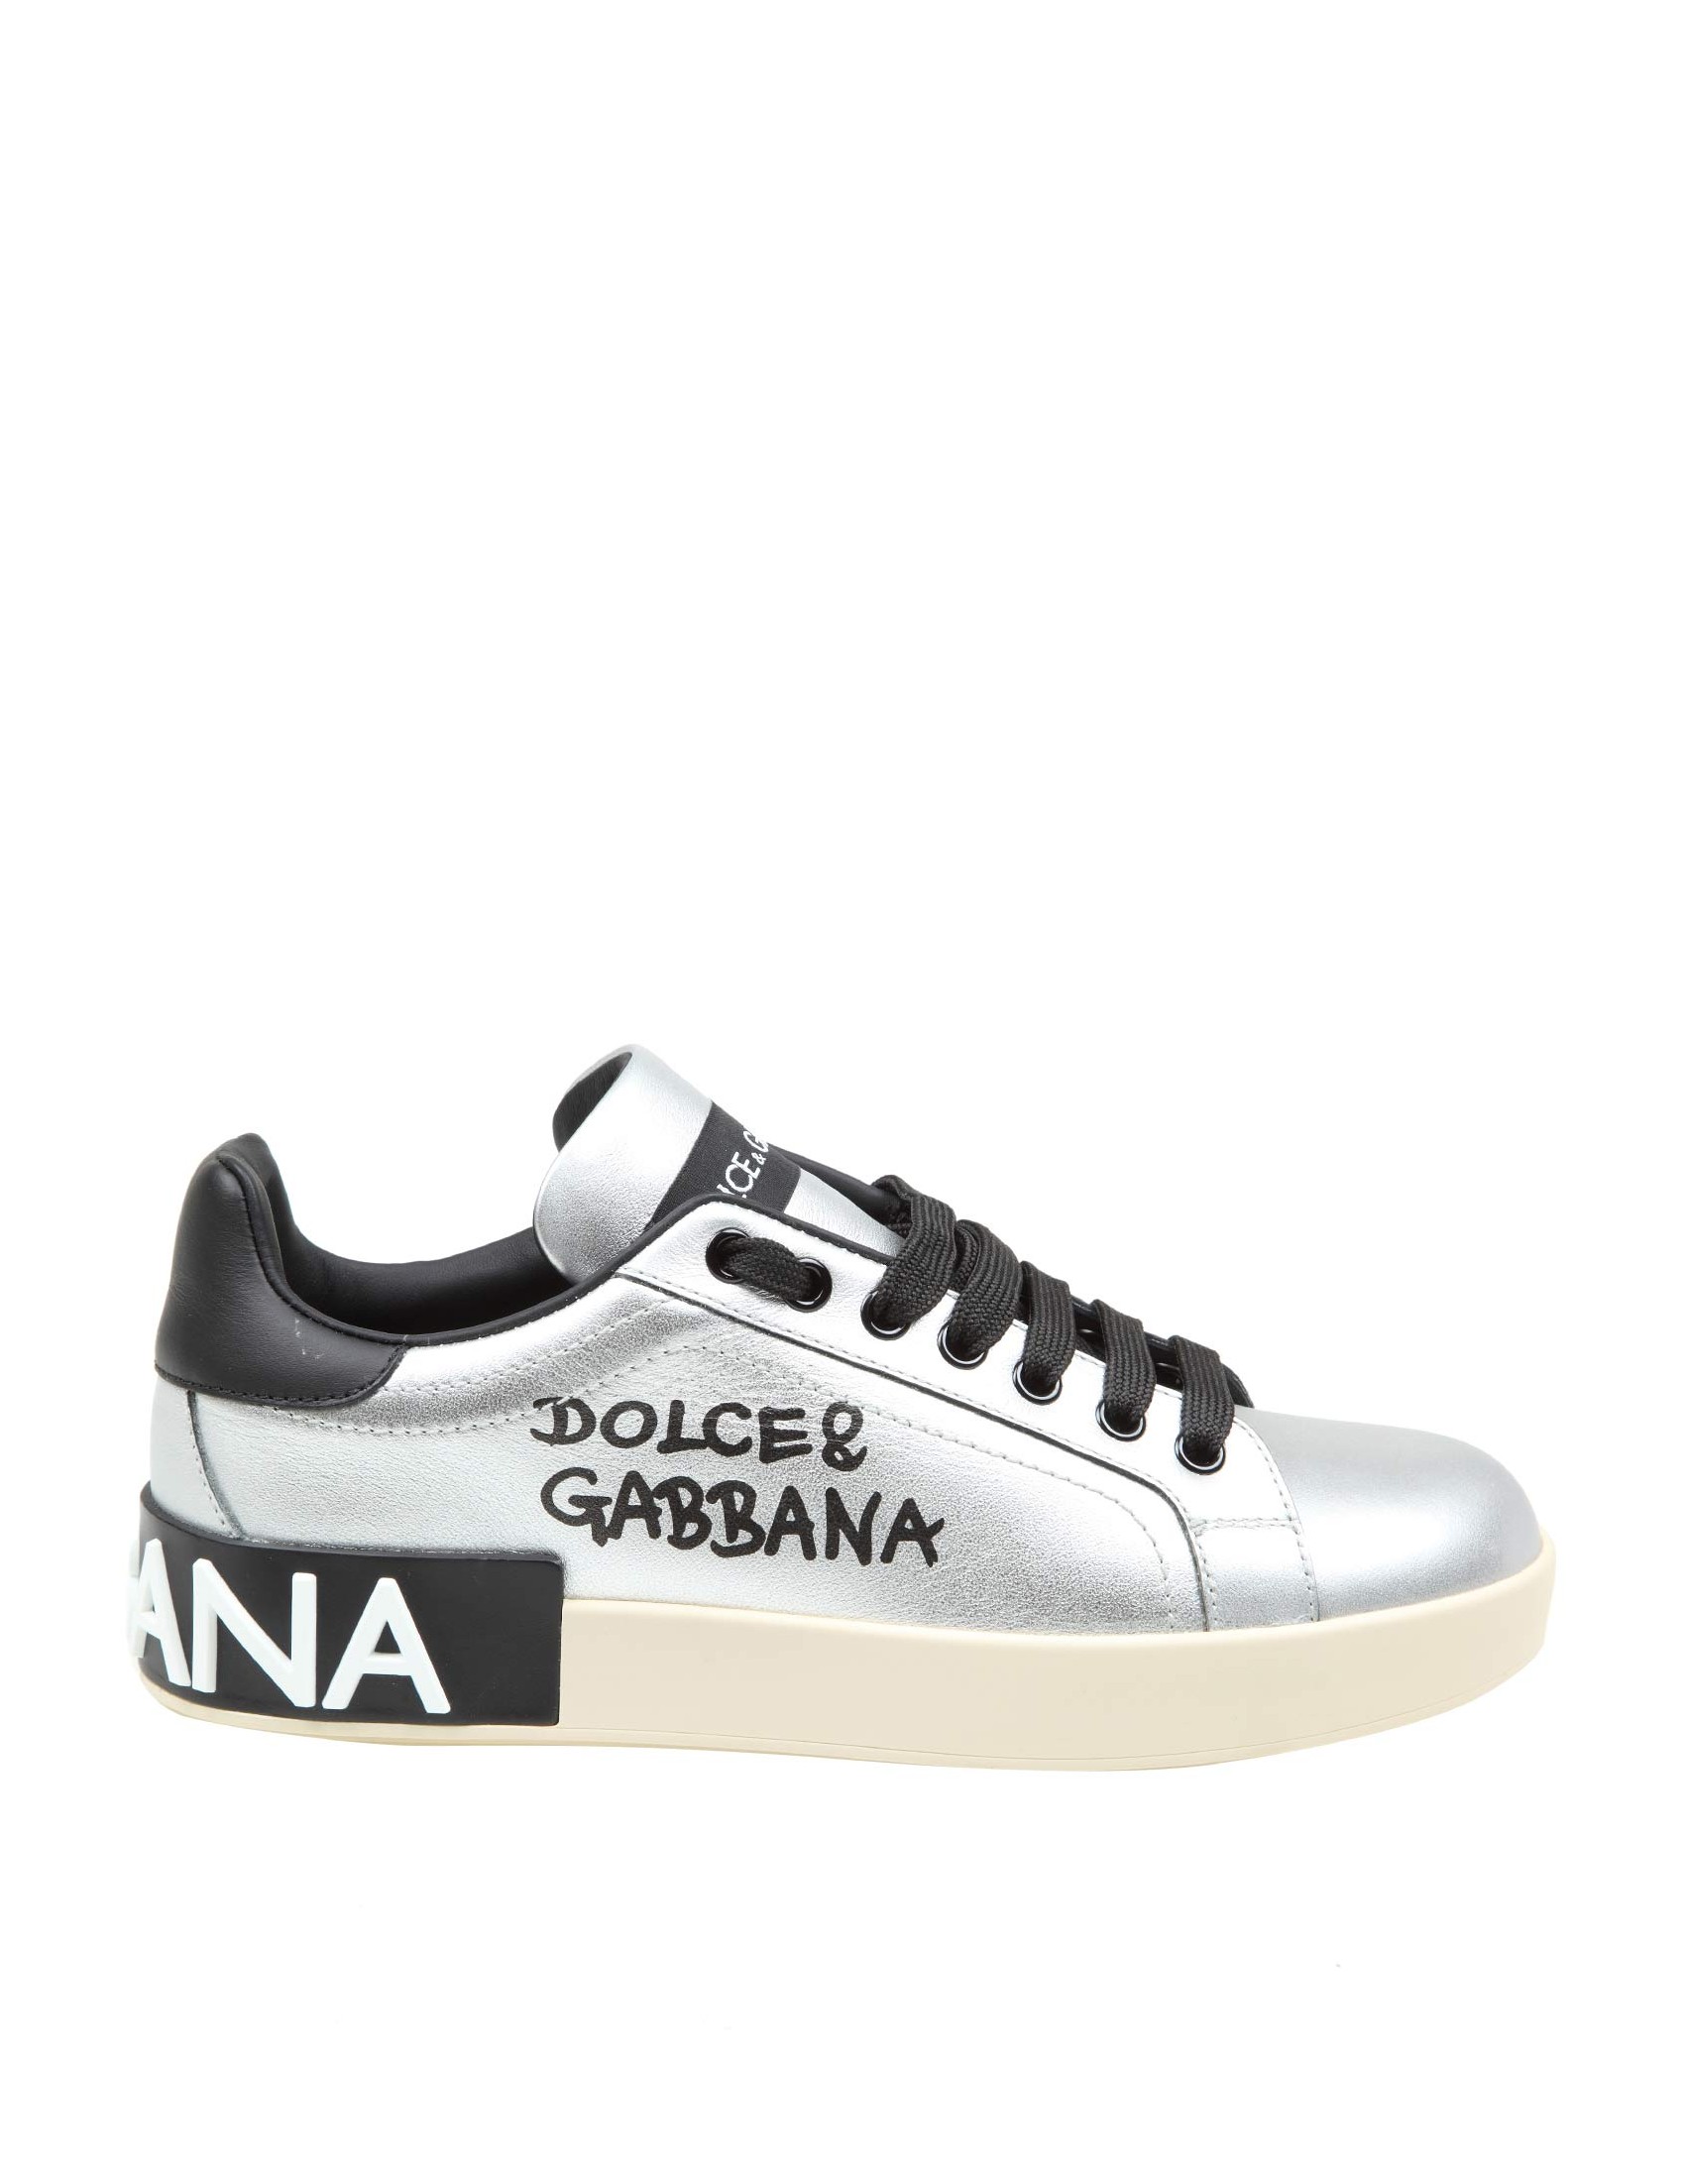 dolce & gabbana women's shoes